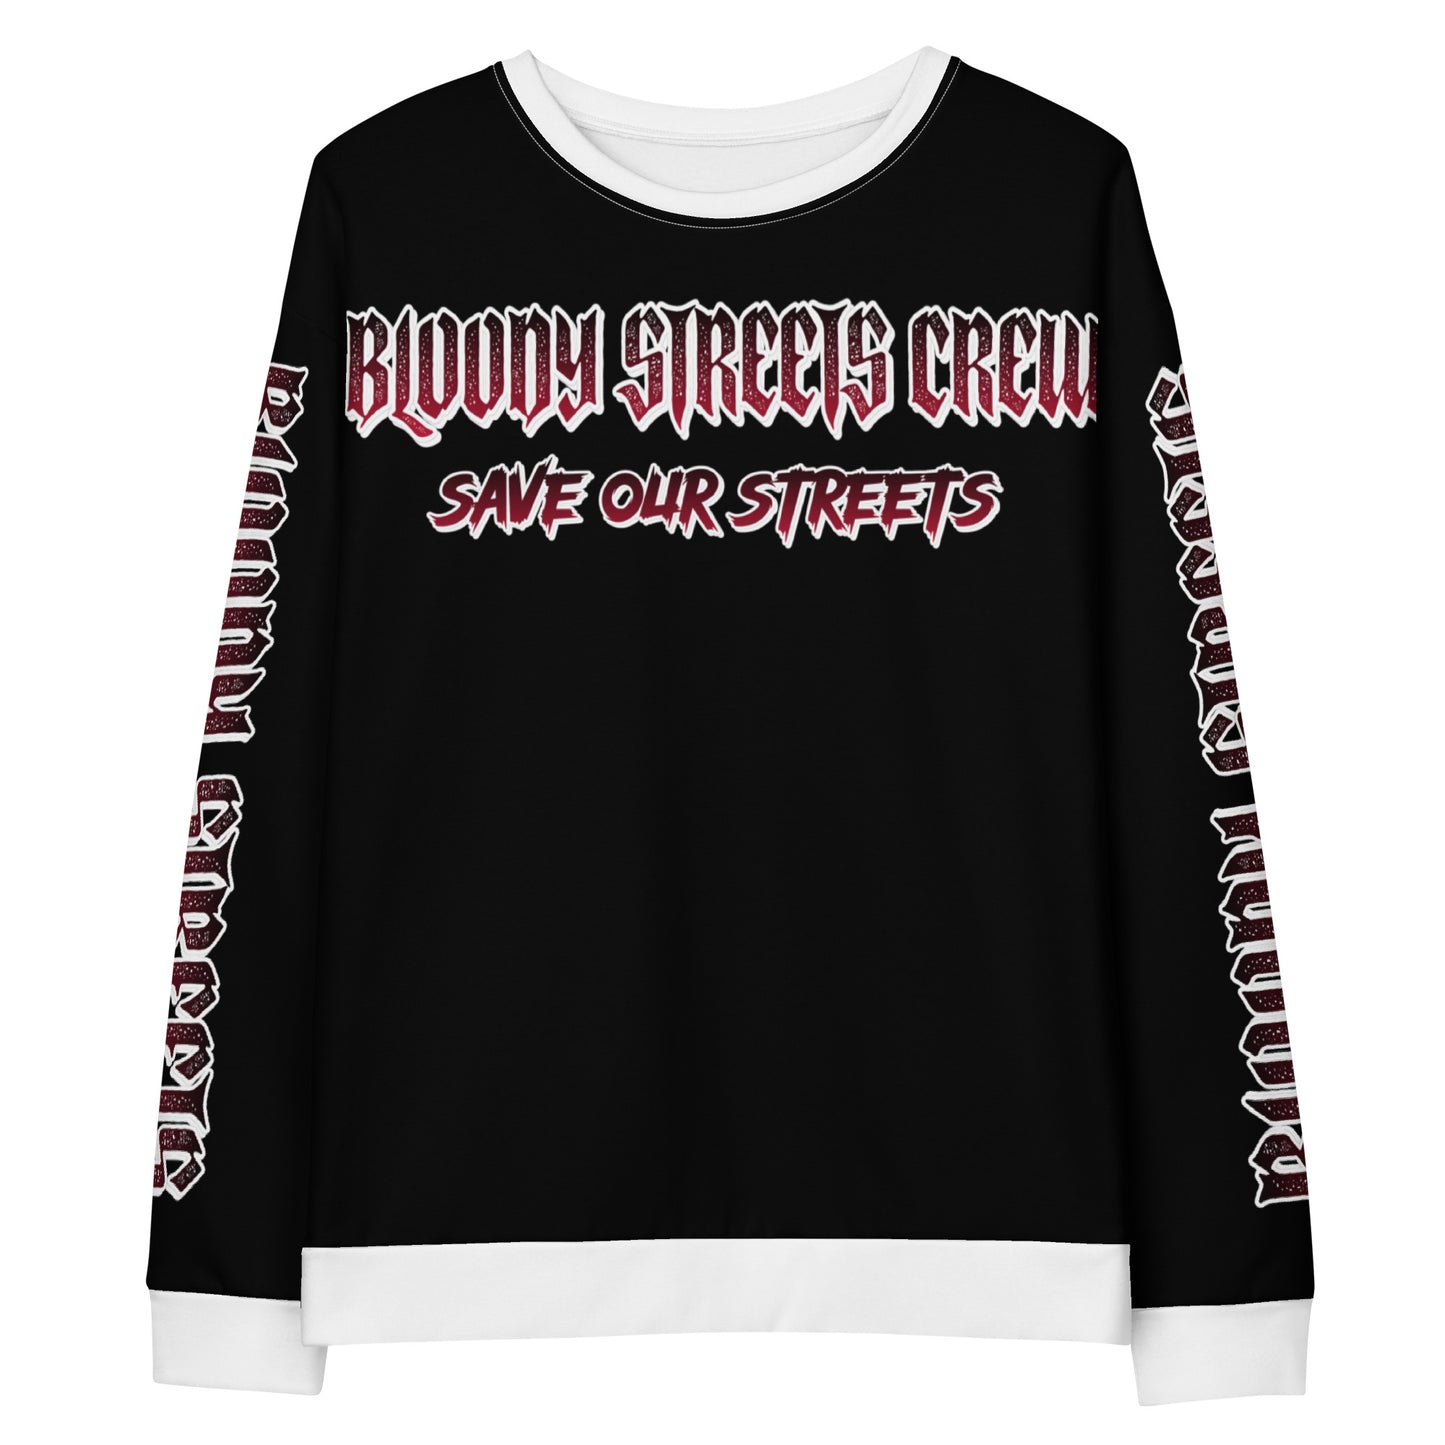 Bloody Streets Crew Member Streetwear Pullover Black - BLOODY-STREETS.DE Streetwear Herren und Damen Hoodies, T-Shirts, Pullis